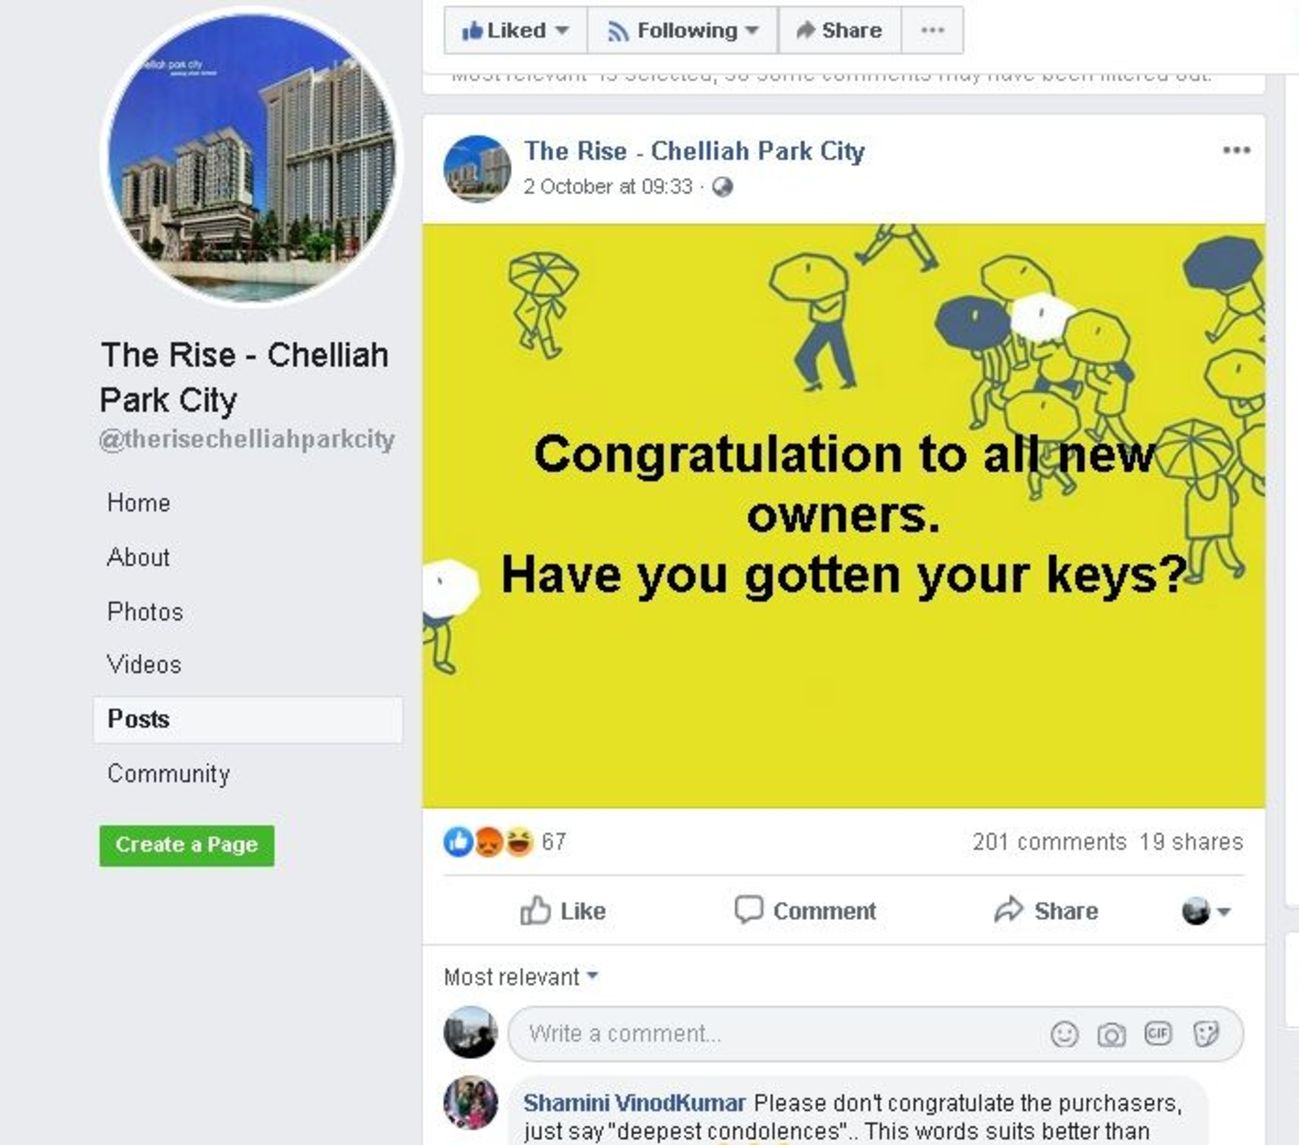 The Rise - Chelliah Park City 的面簿专页于10月2日发出贴文，写道“恭喜所有的屋主，你们都获得钥匙了吗？”